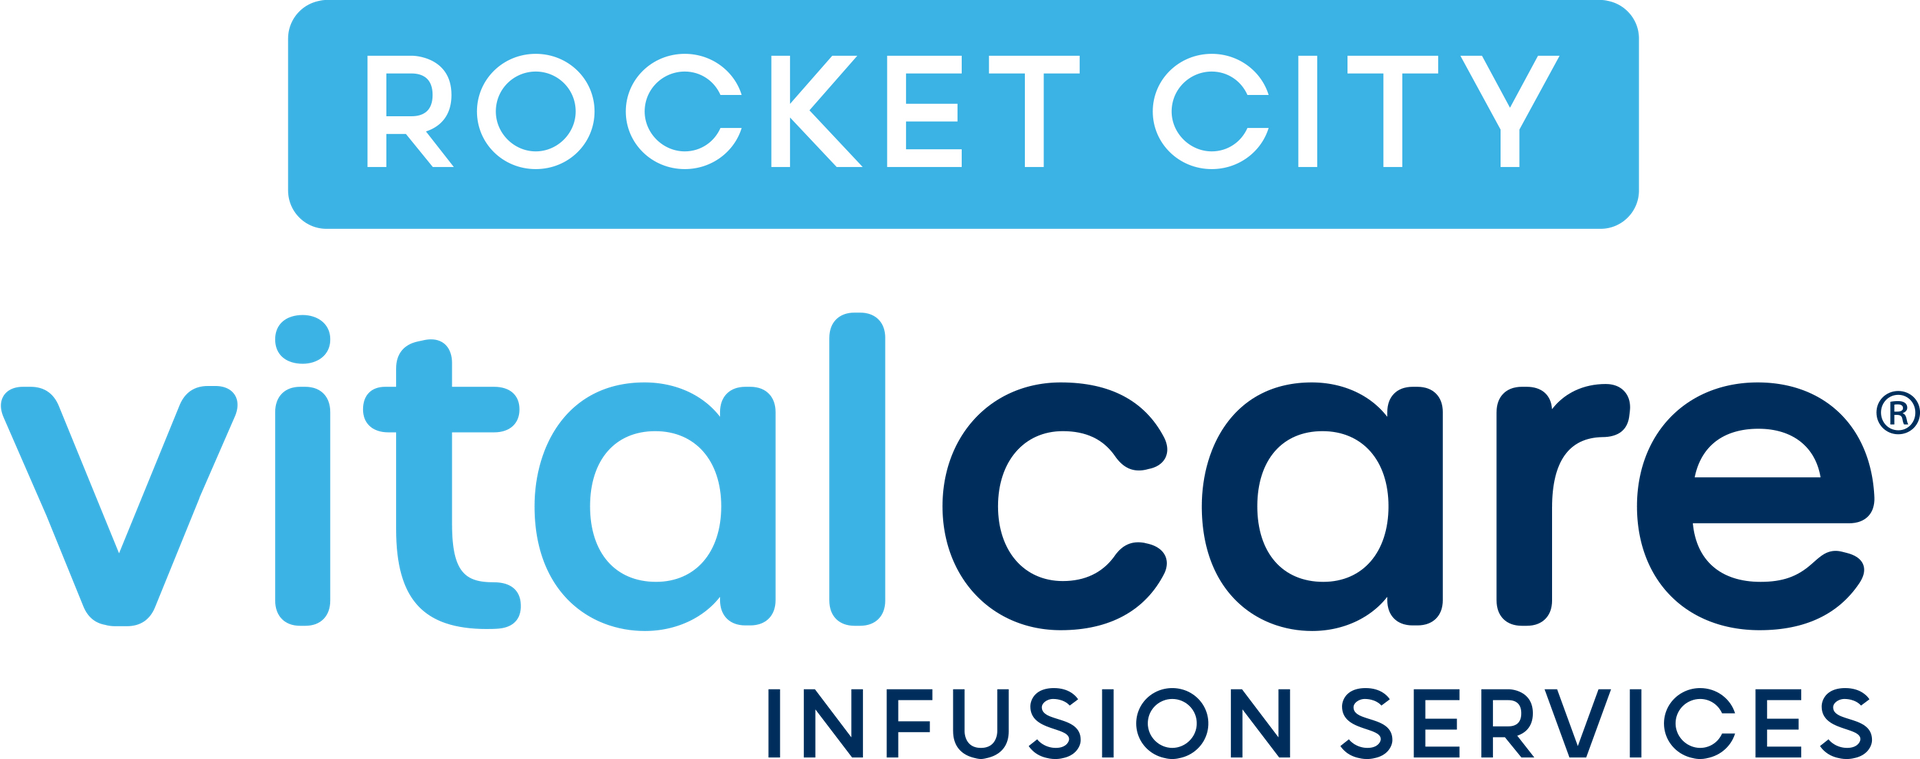 Rocket City Vital Care logo